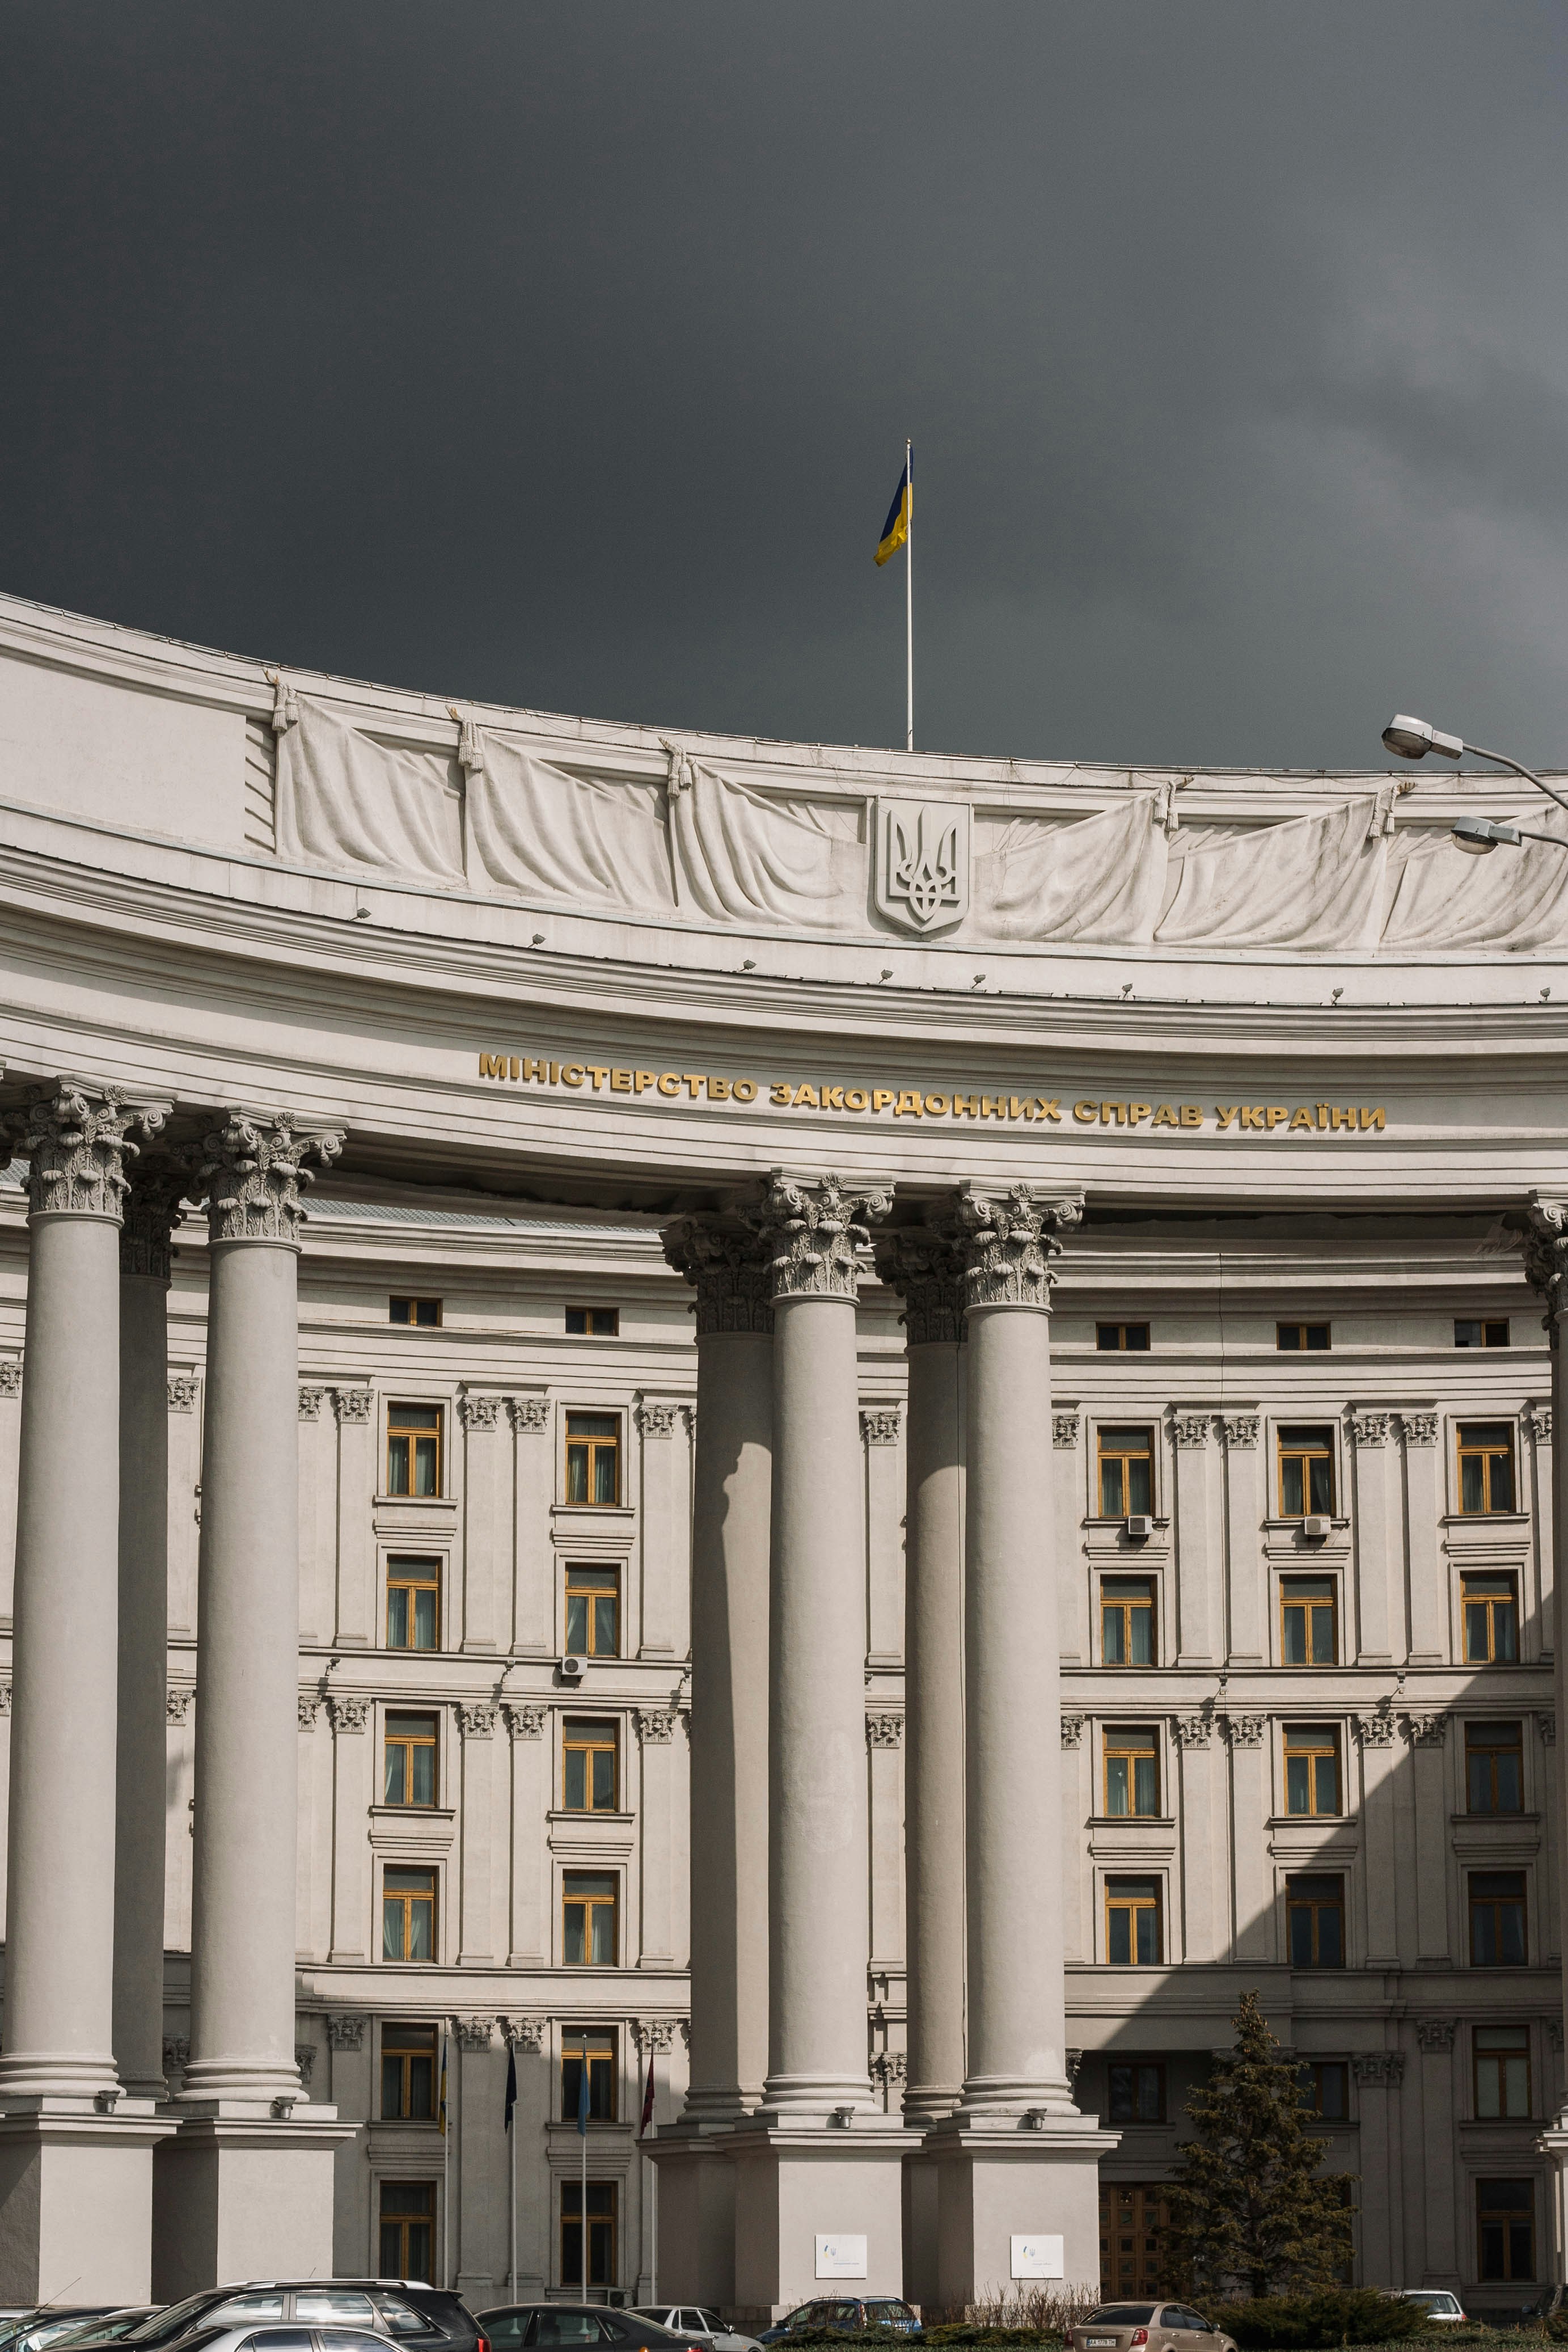 Міністерство закордонних справ України / MFA of Ukraine, Kyiv, Ukraine Хмарне небо/cloudy sky